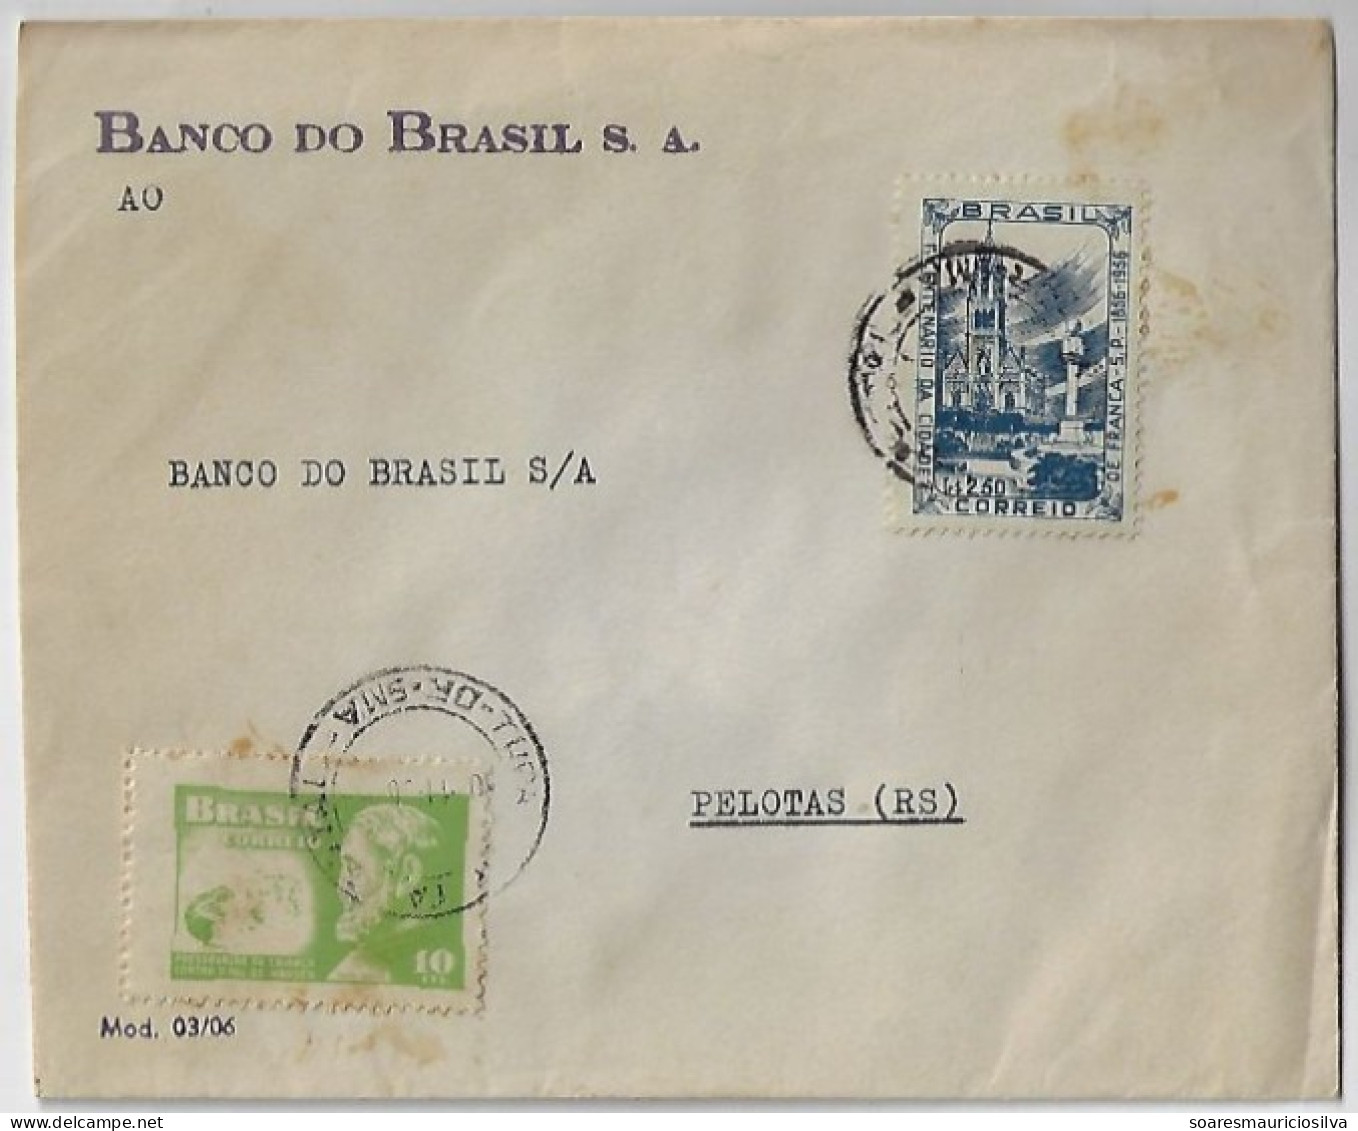 1956 Bank Of Brazil Cover Sent From Santa Maria Area To Pelotas Stamp Fanca City 1st Centenary + Hansen's Disease - Briefe U. Dokumente